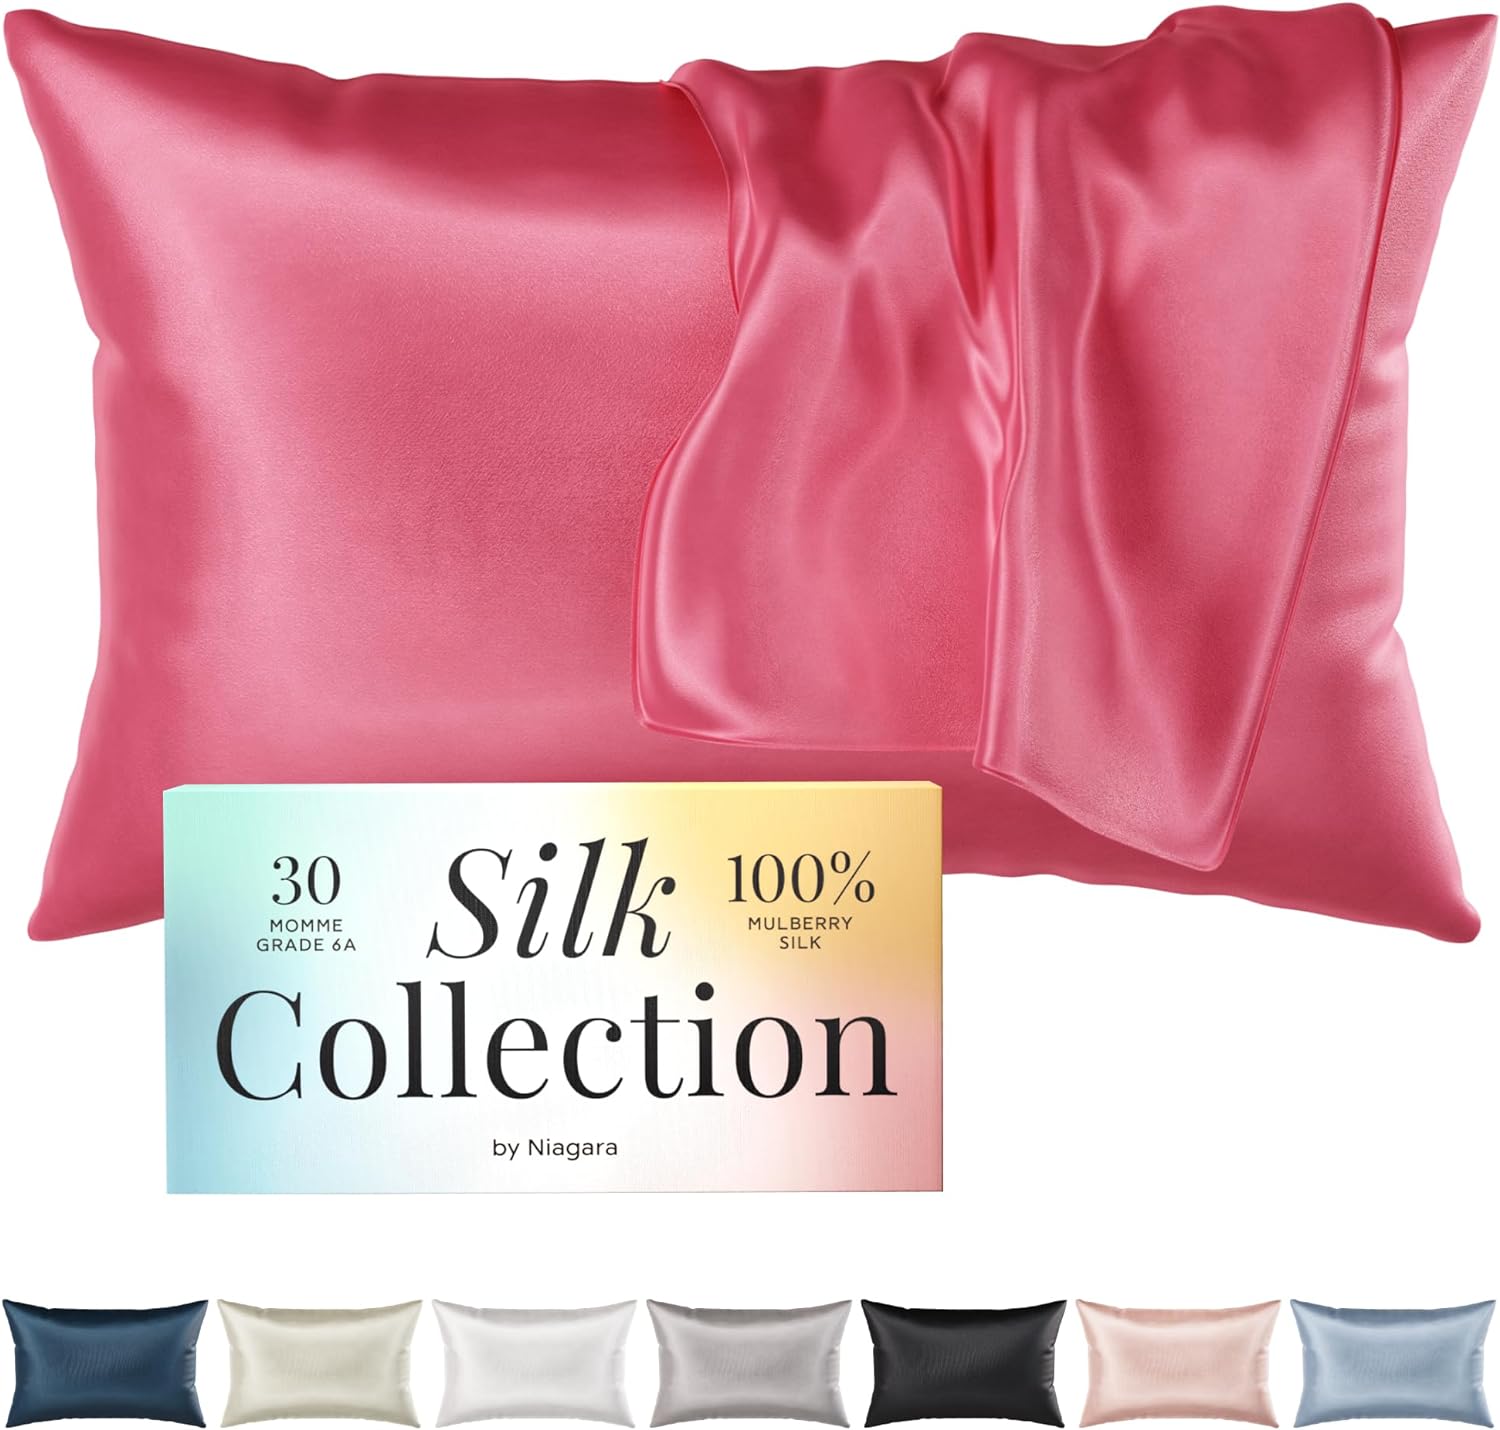 Niagara 100% Mulberry Silk Pillowcase - 30 Momme Silk Pillow case for Hair and Skin - Grade 6A Silk Pillow Cases with Zipper - Soft & Cooling Bright Pink Silk Pillowcase Queen Size (20x30)